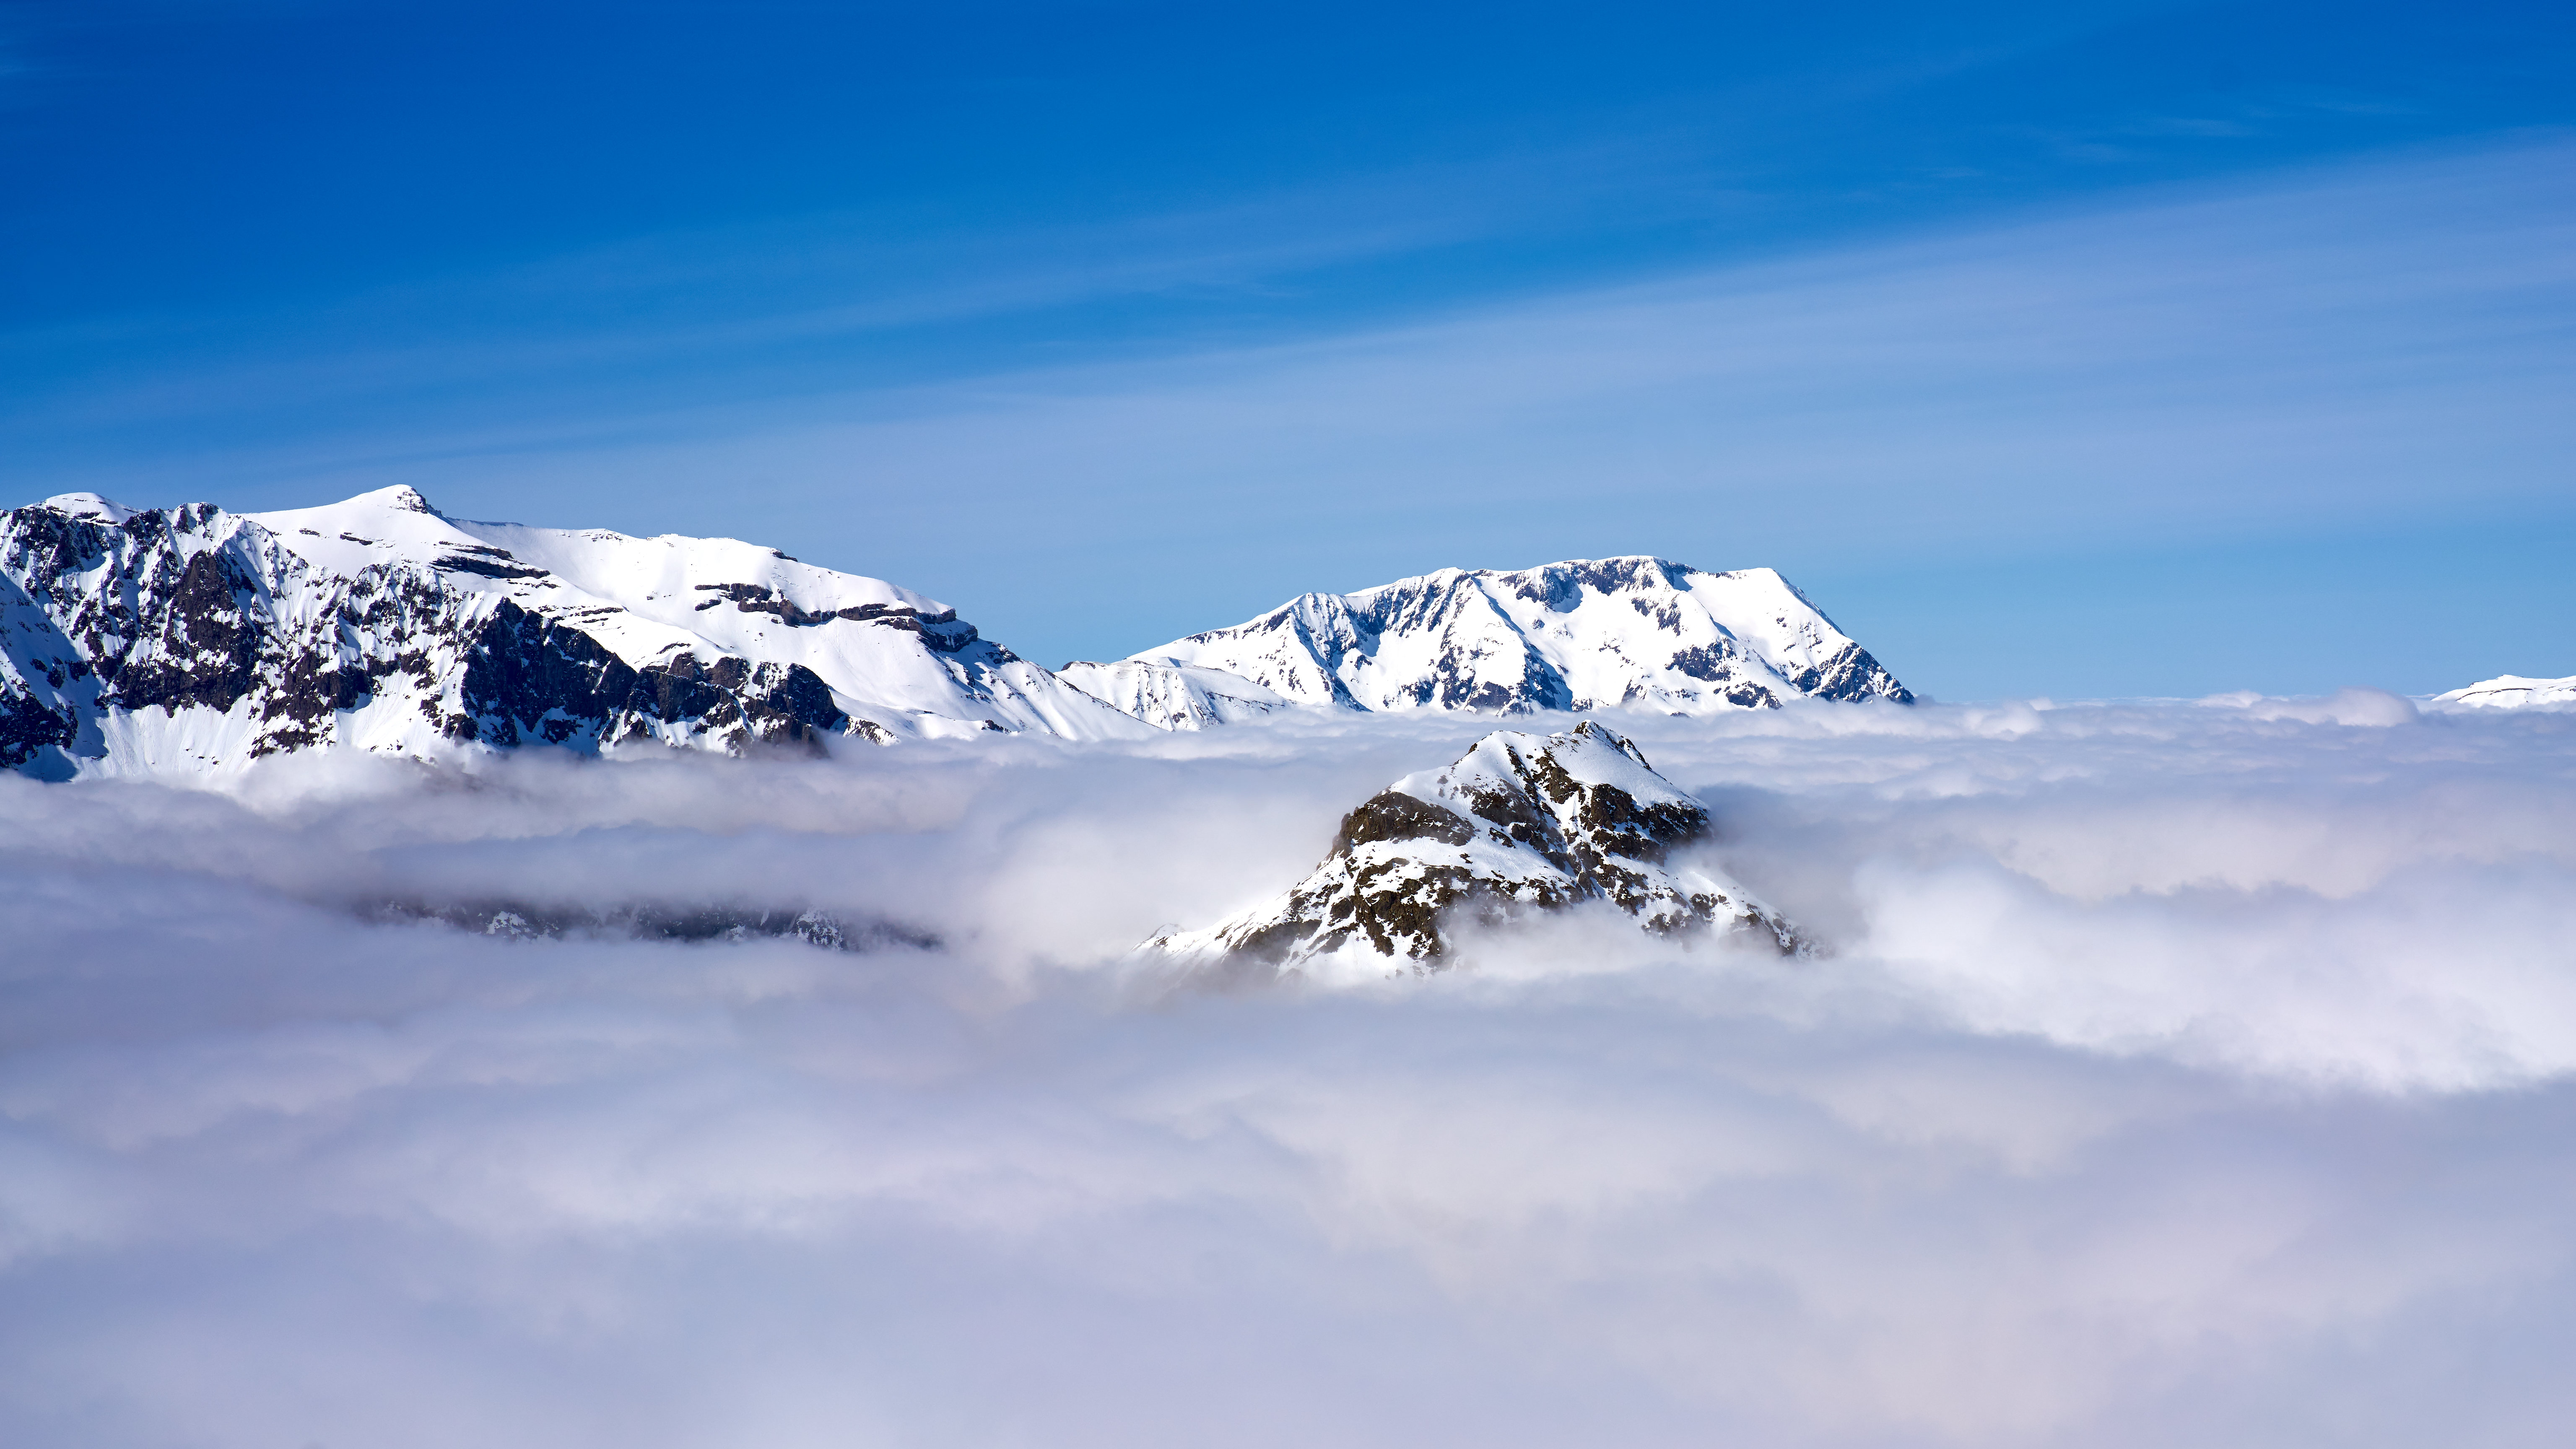 General 6144x3456 mountains clouds snow snowy peak sky Alps France landscape nature